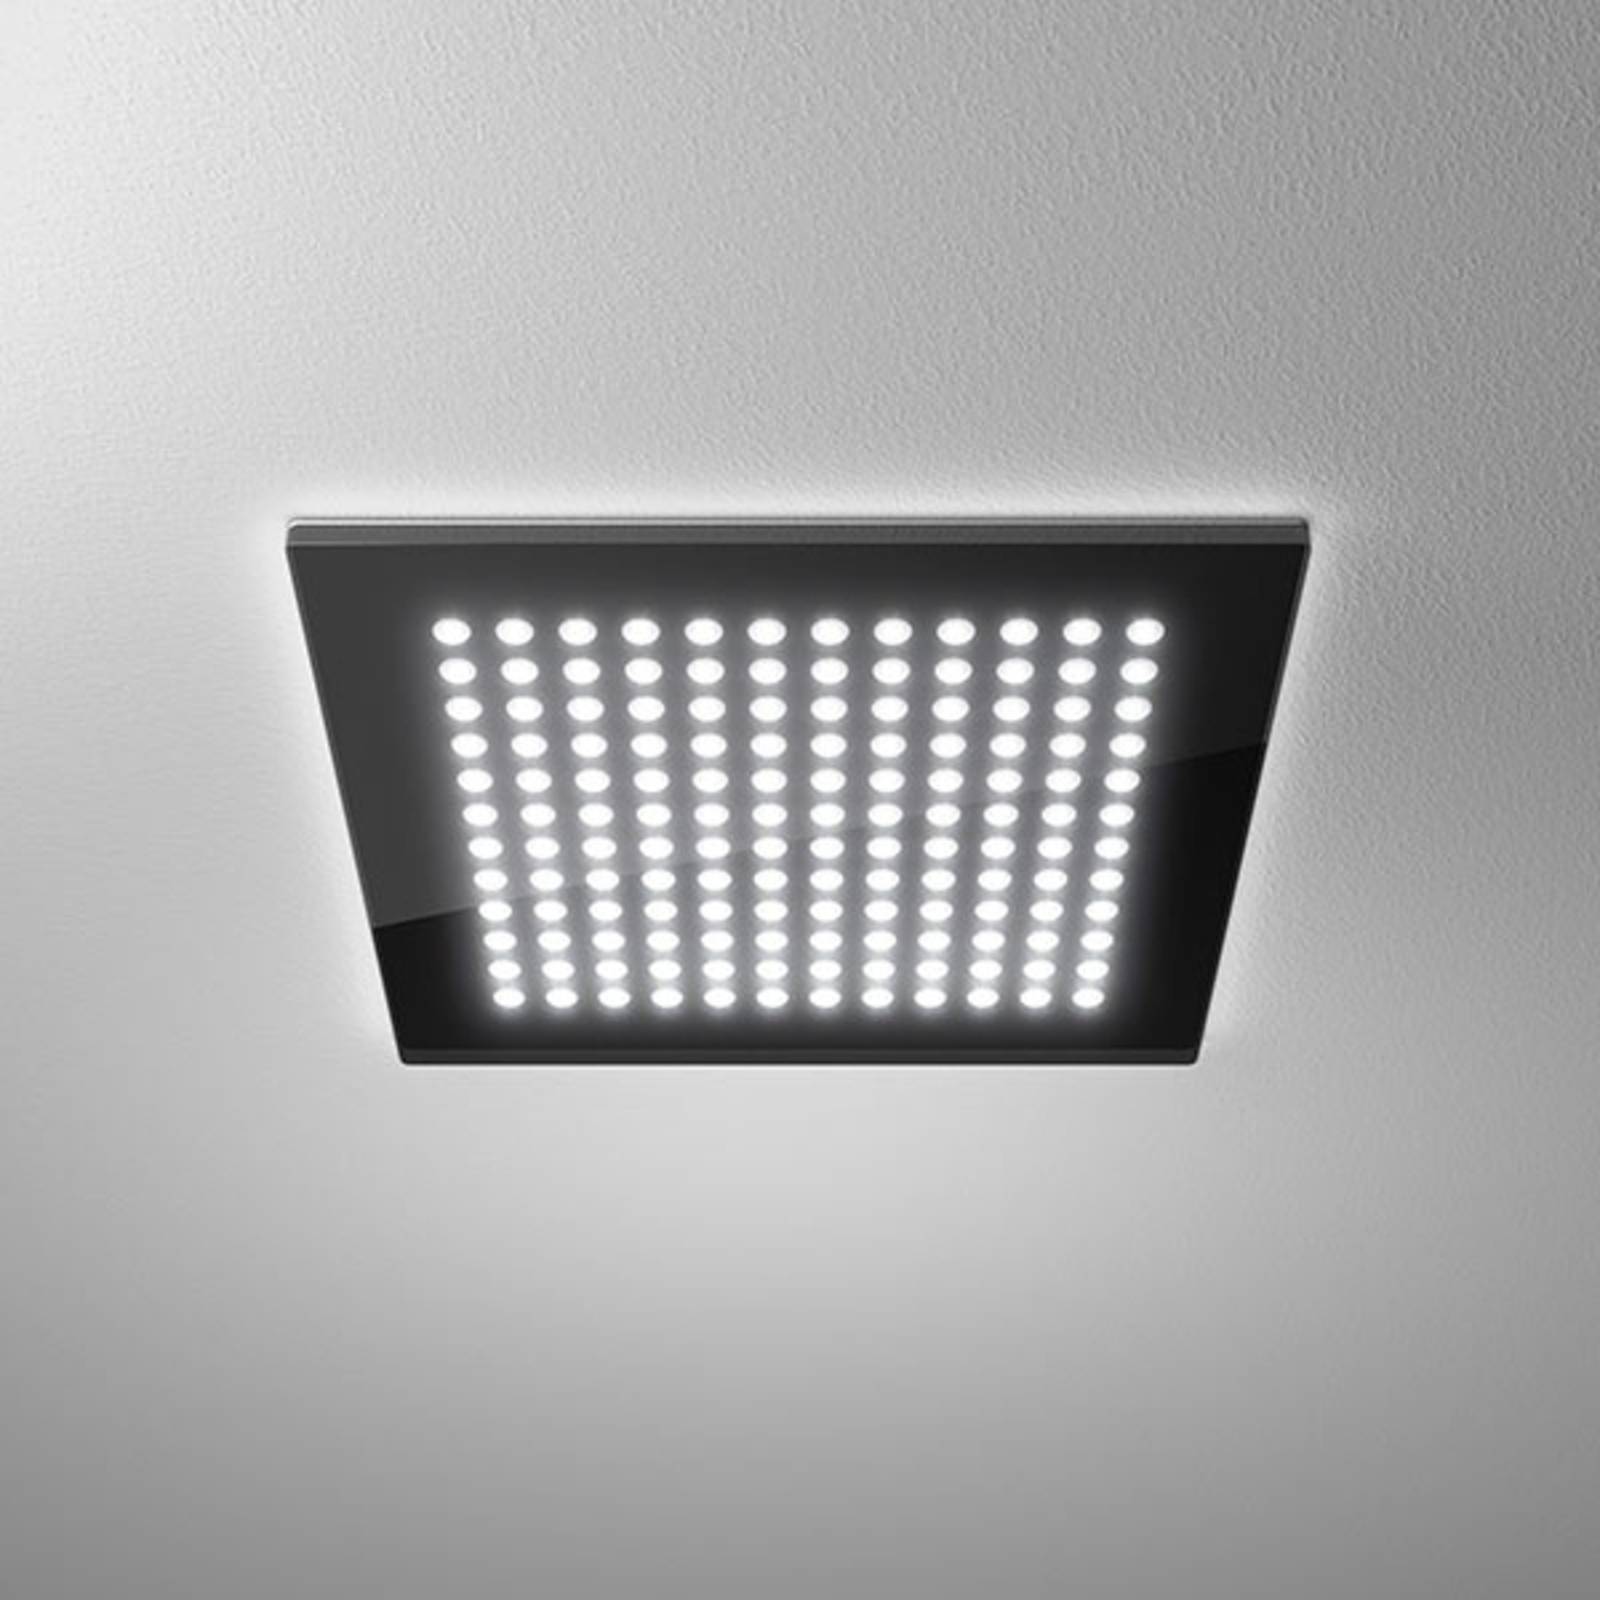 LED-Downlight Domino Flat Square, 26 x 26 cm, 22 W von LTS